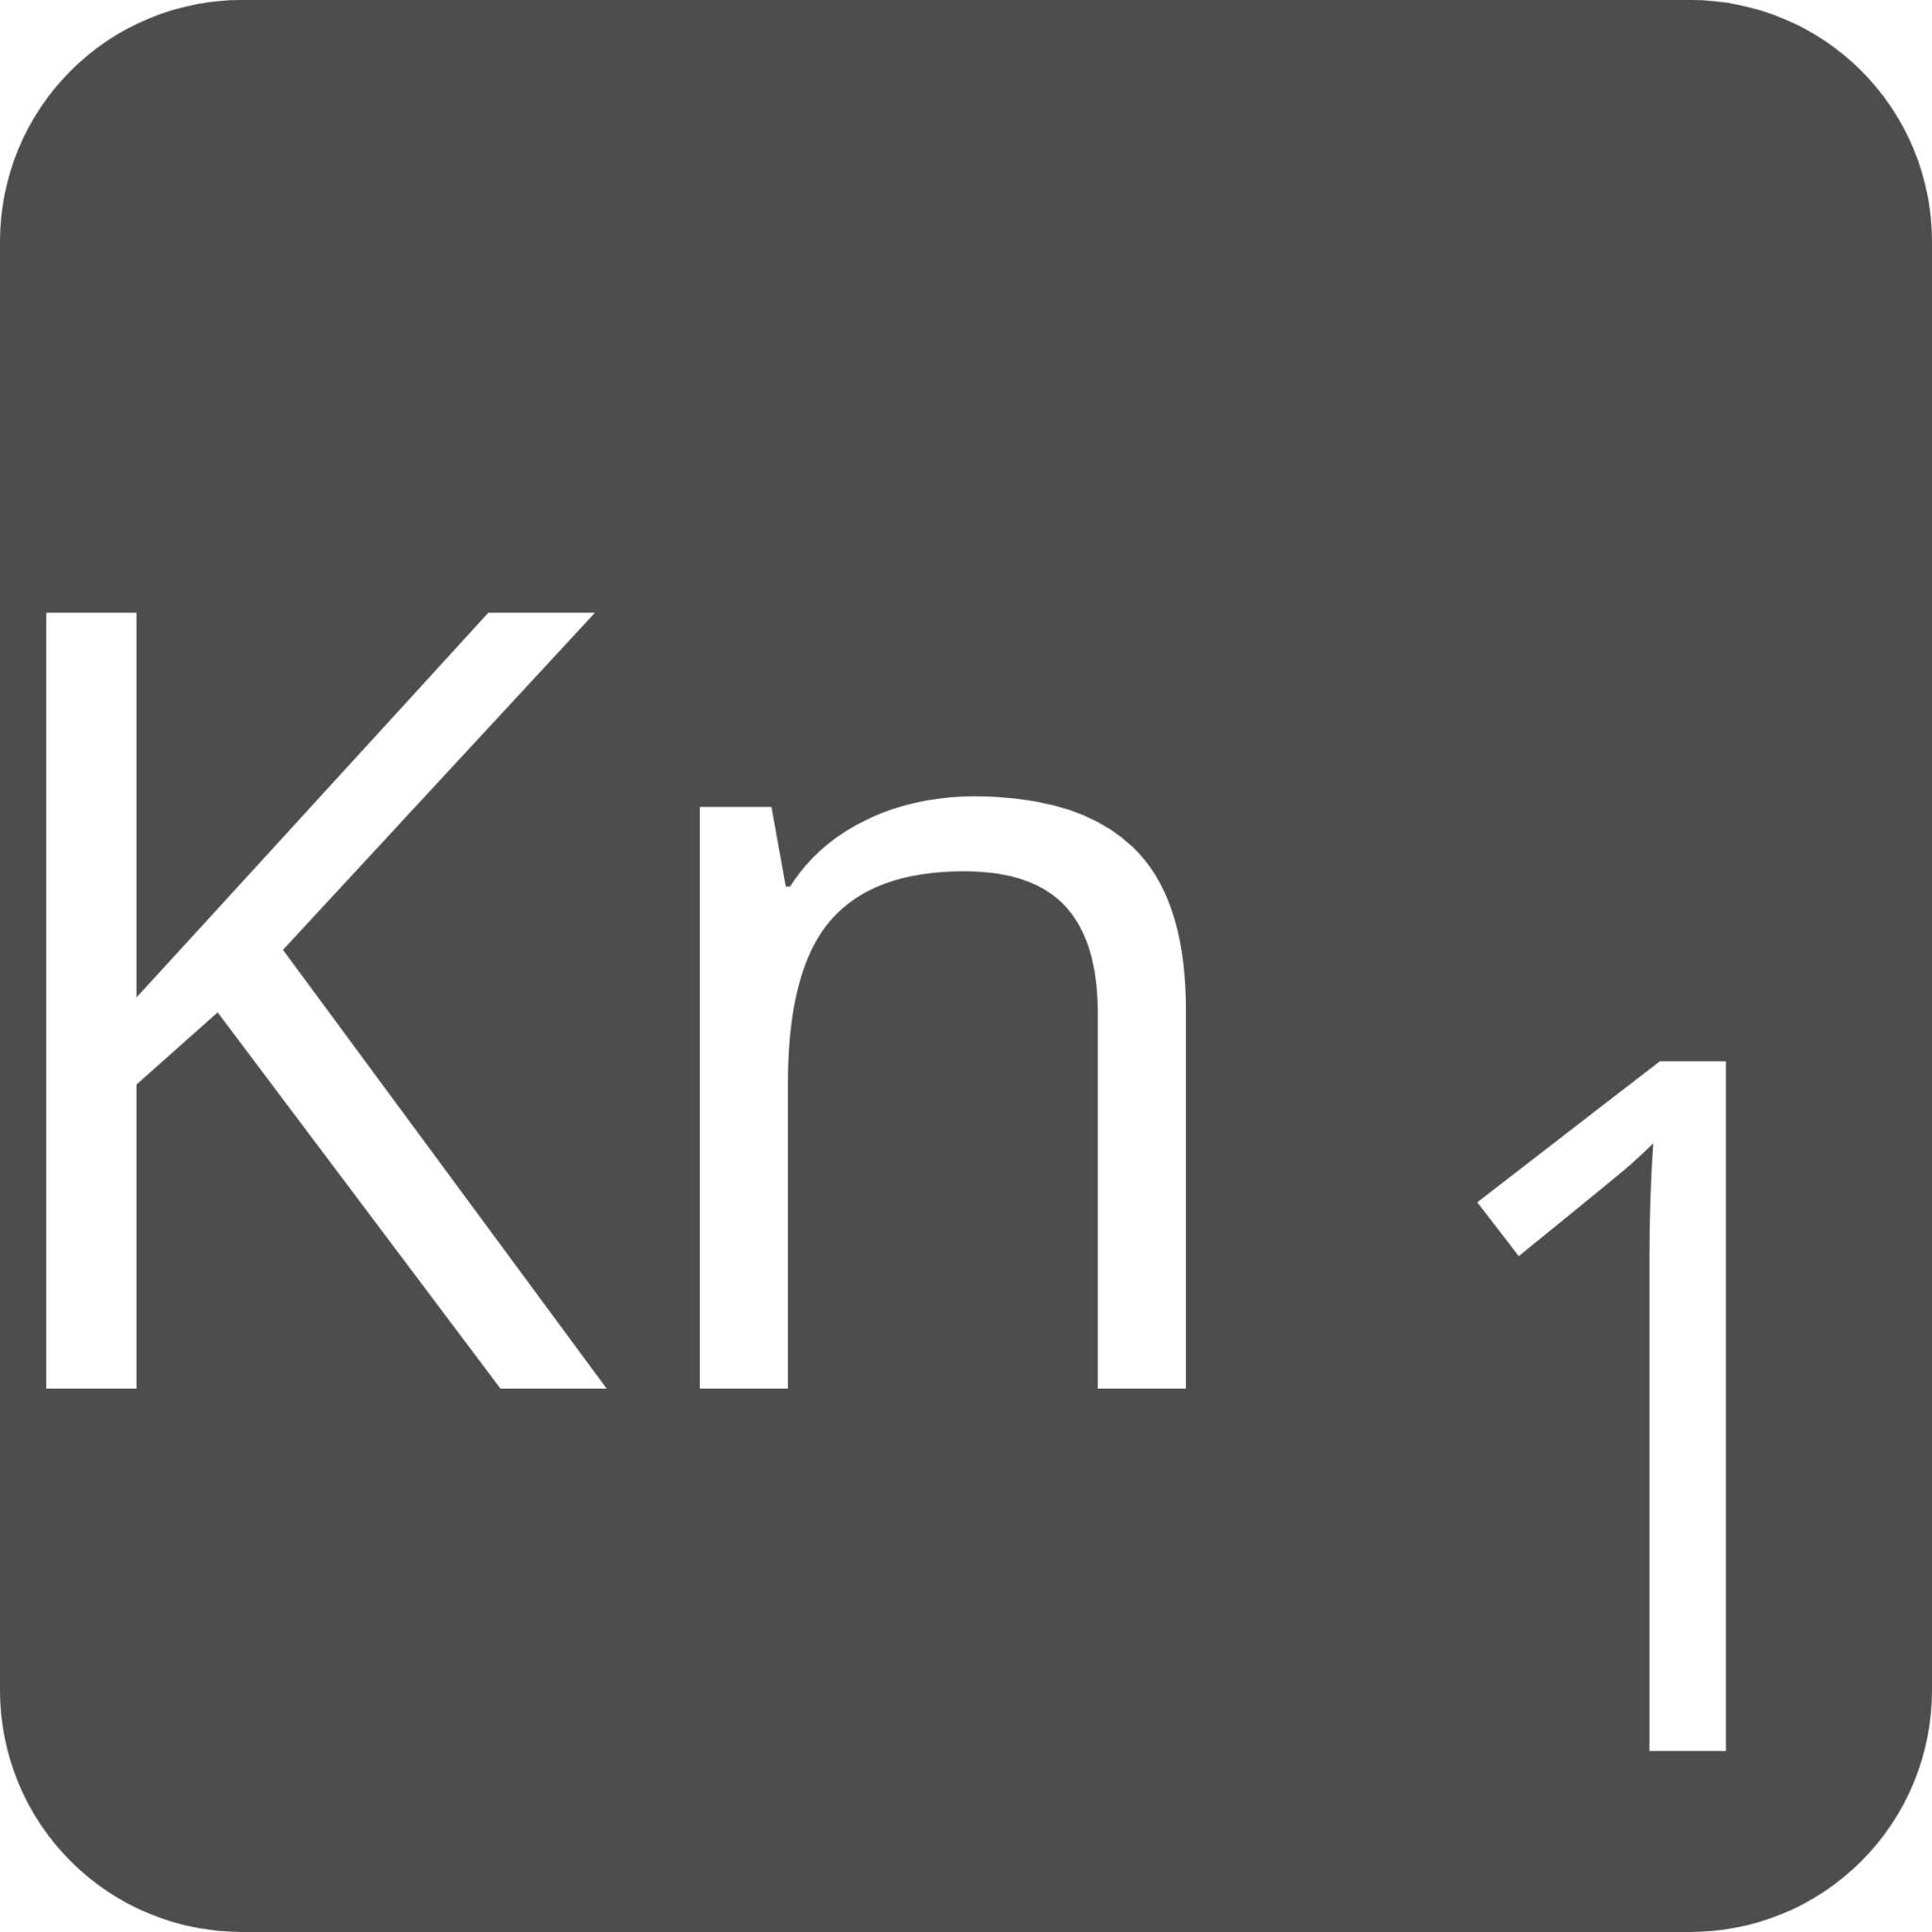 indicator keyboard Kn 1 icon